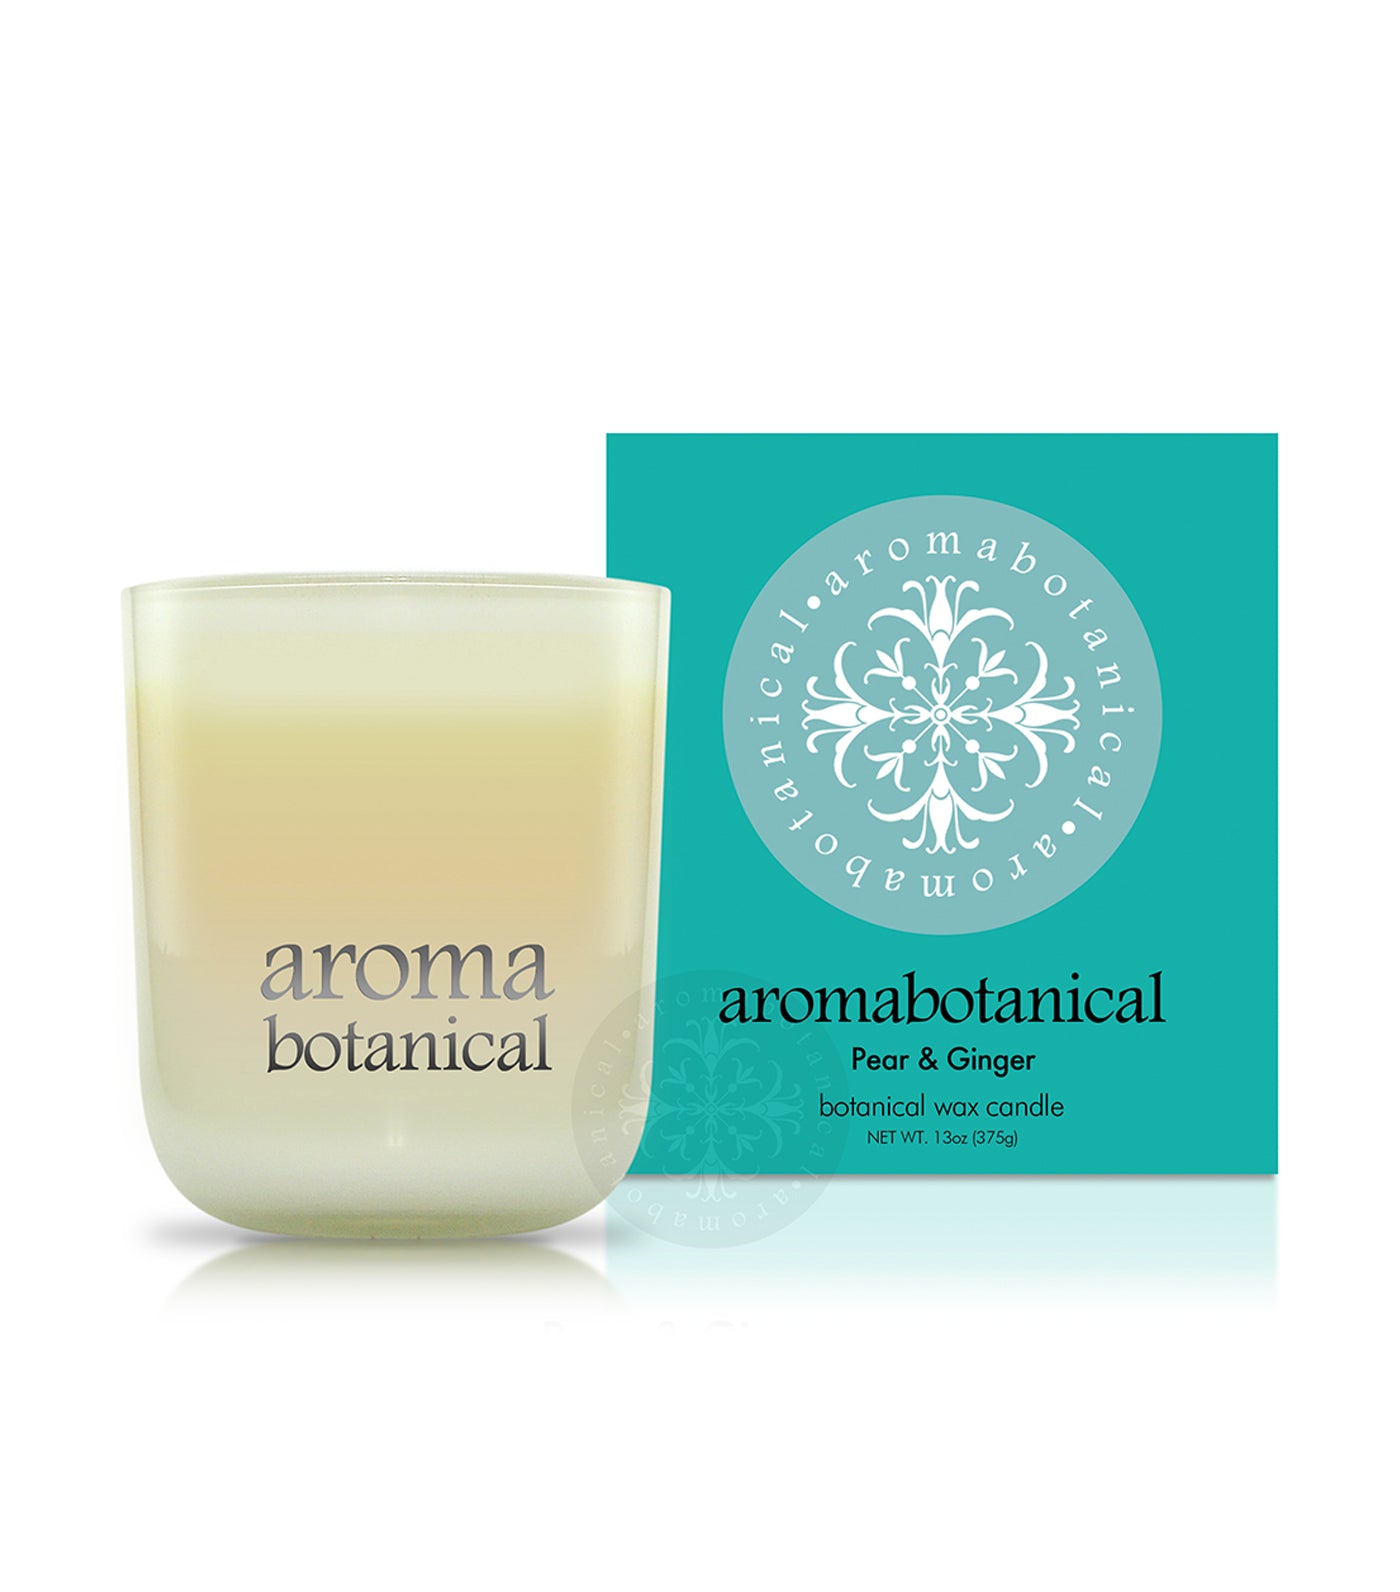 aromabotanical pear & ginger 375g candle